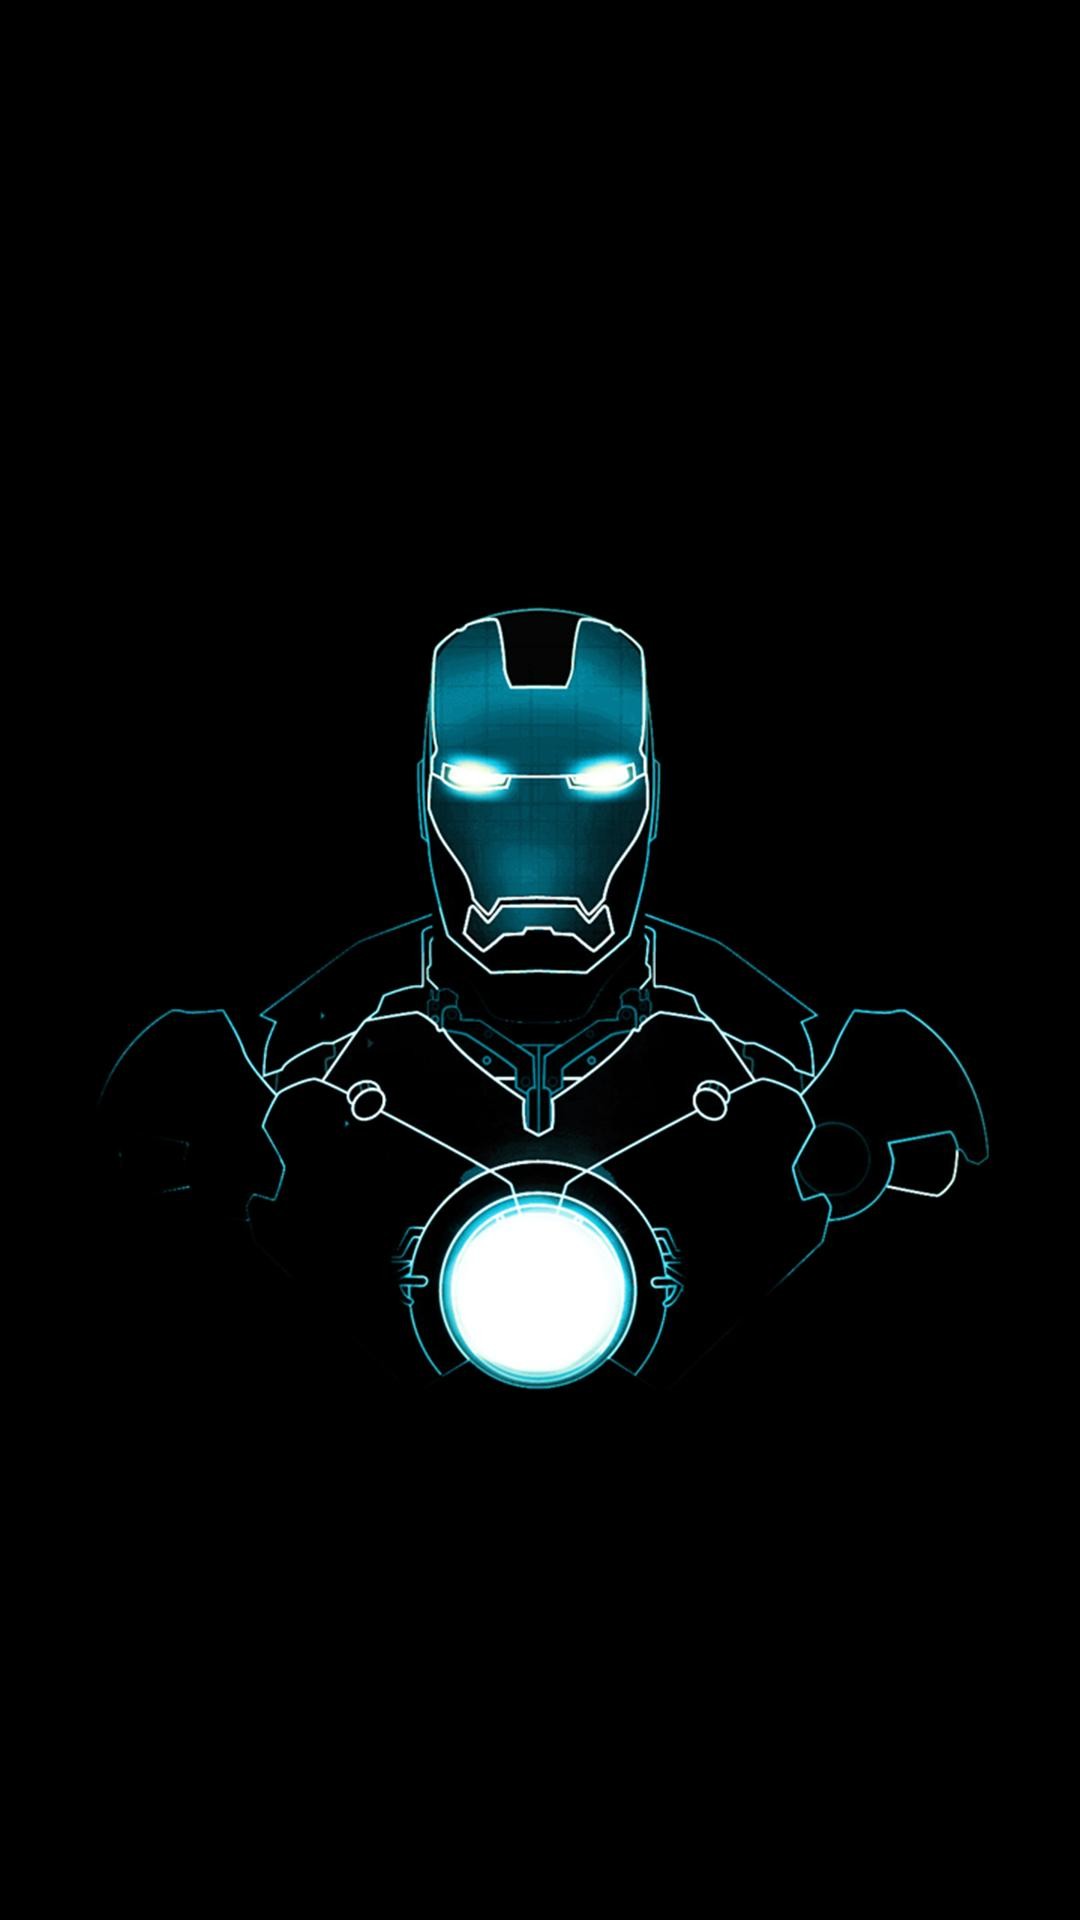 1080x1920 wallpaper.wiki-Iron-Man-1080-x-1920-Background-